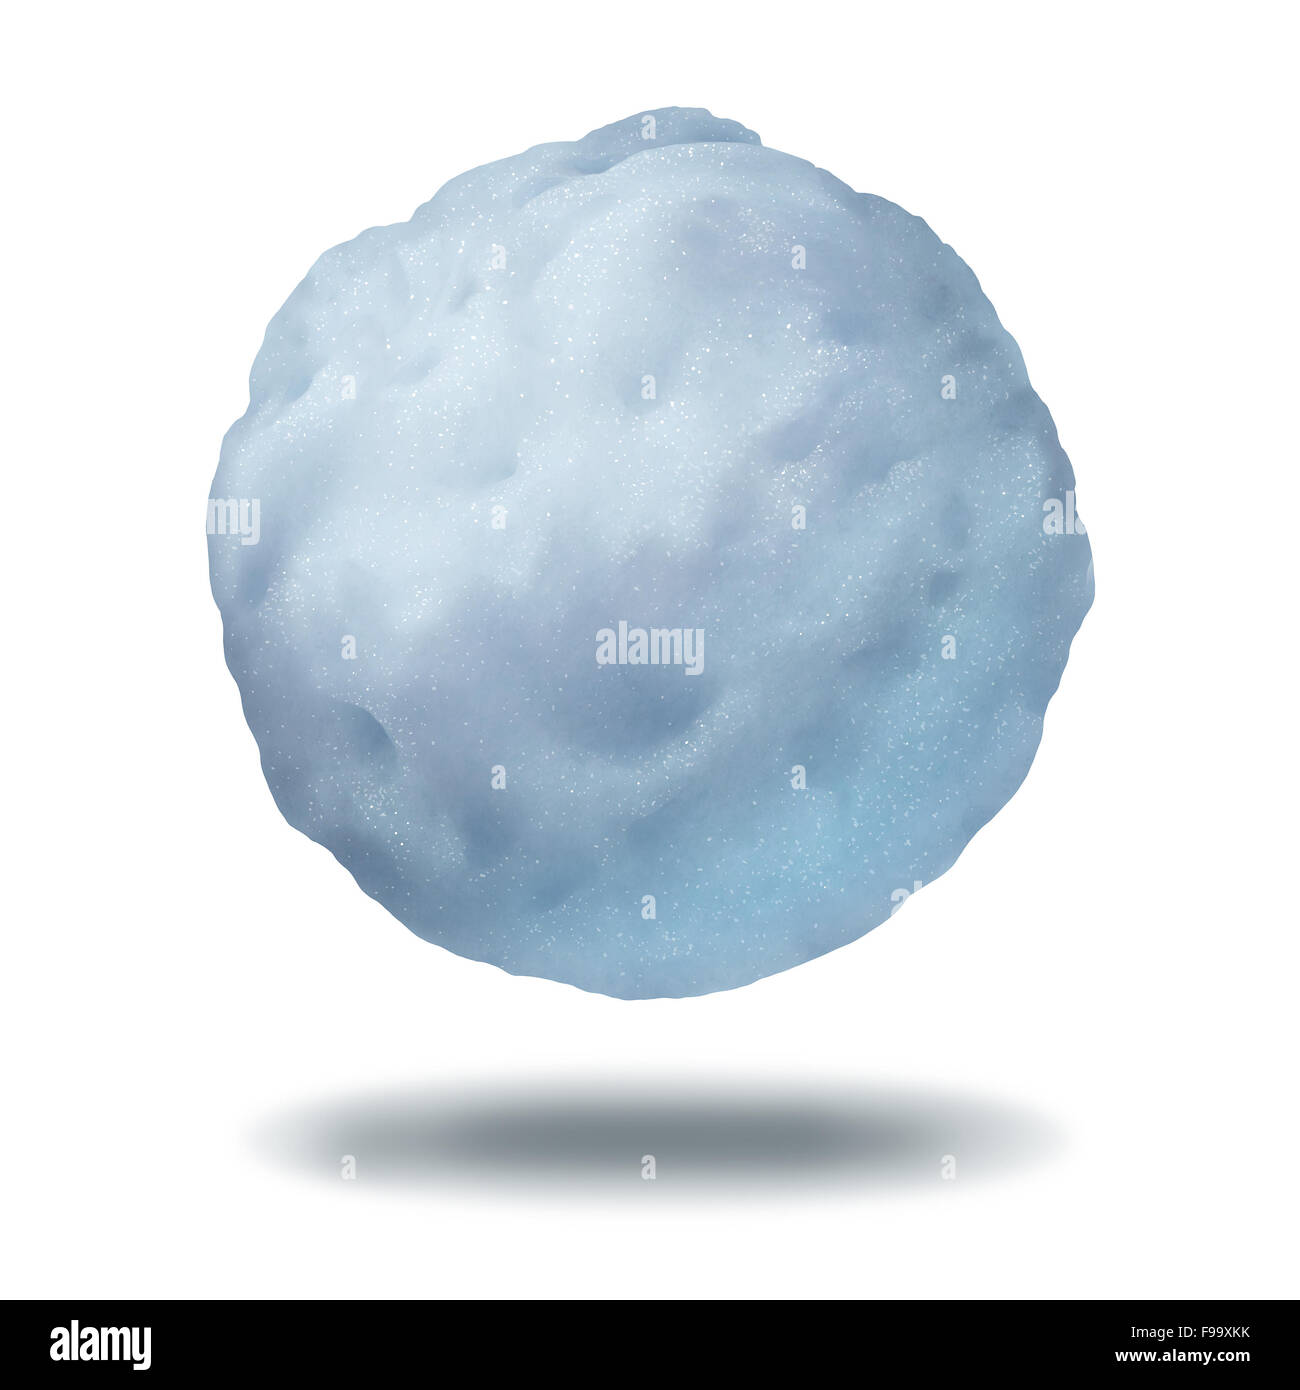 Snowball icono como un flotante o arrojados congelados hielo invernal crystal objeto sphere aislado sobre un fondo blanco con un elenco sombra Foto de stock